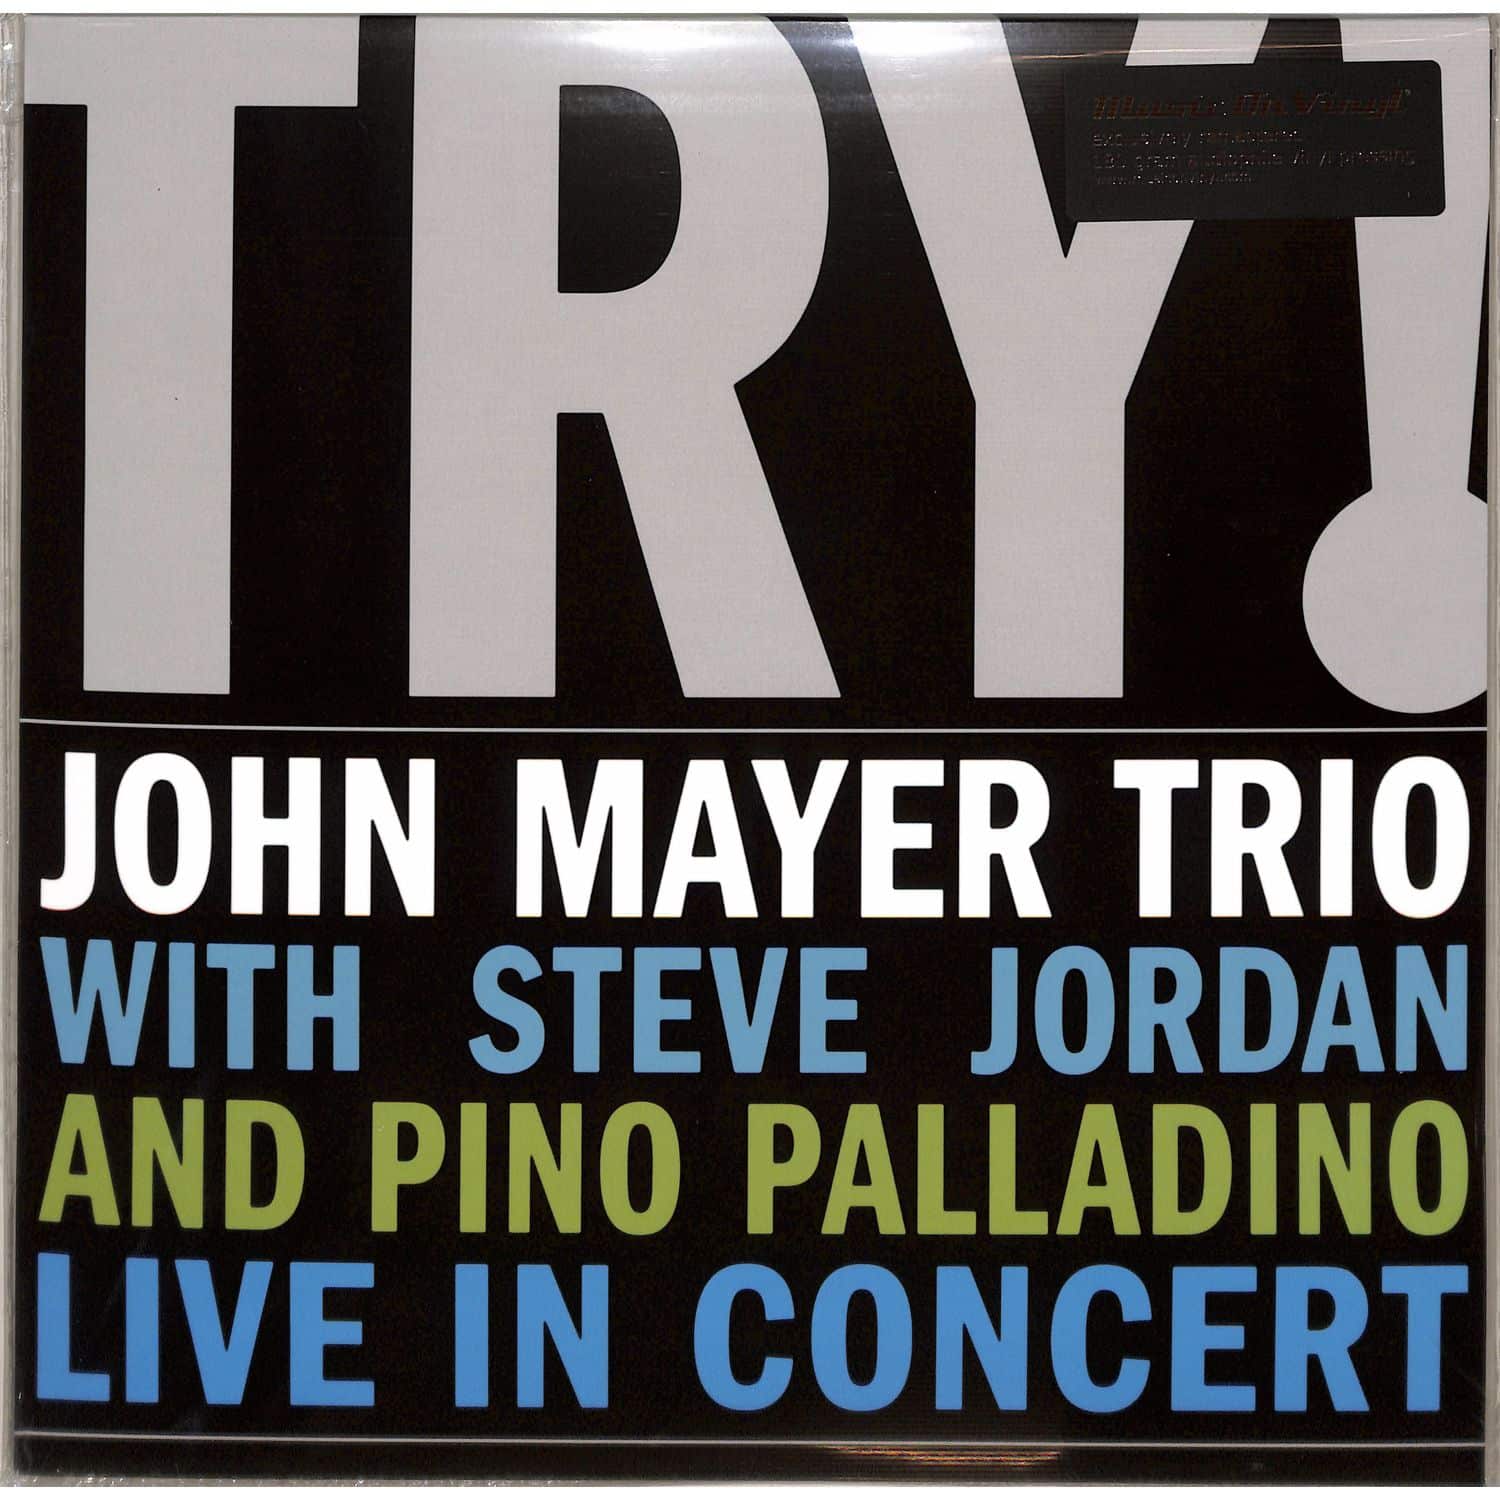 John Mayer Trio - TRY! LIVE IN CONCERT 